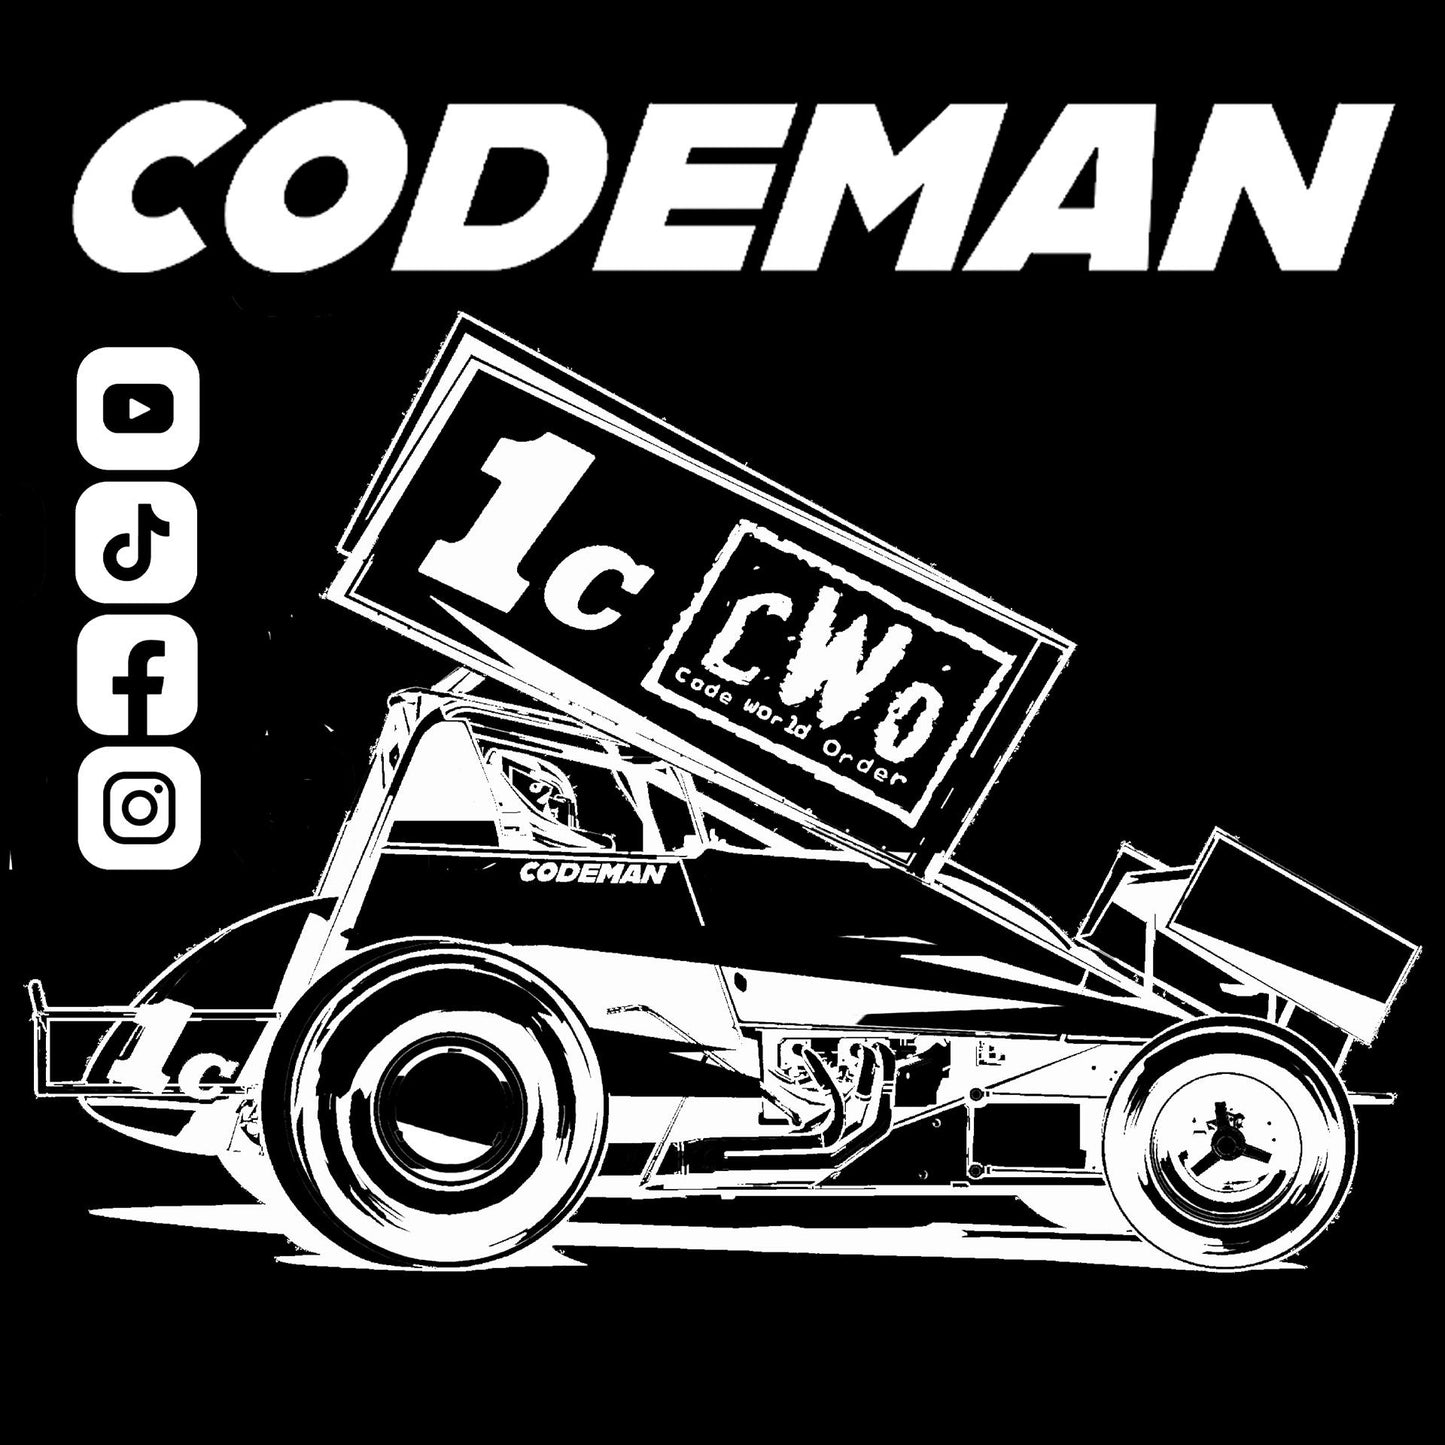 Codeman Sprint Car T- Shirt